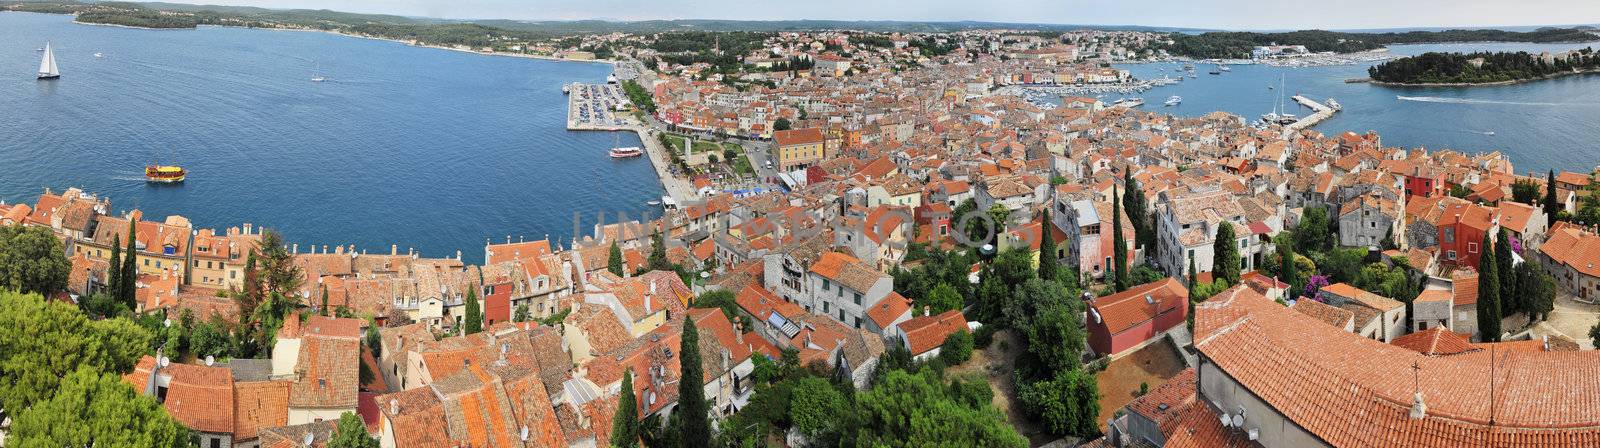 High angle view of the Dalmatian coast from the city of Rovinj Croatia